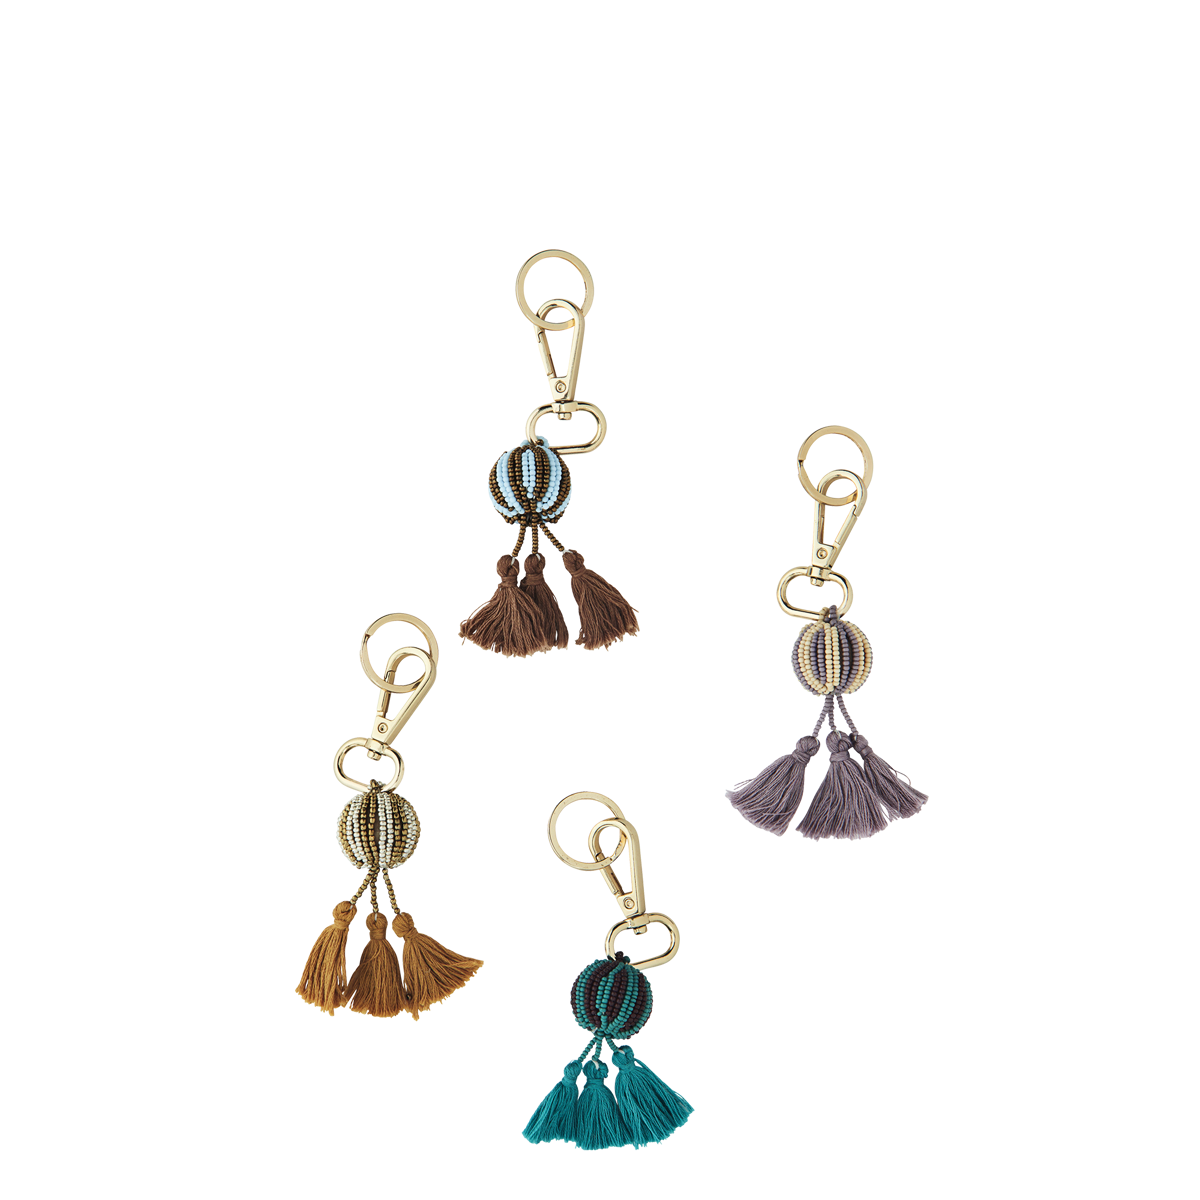 Round key hanger w/ beads